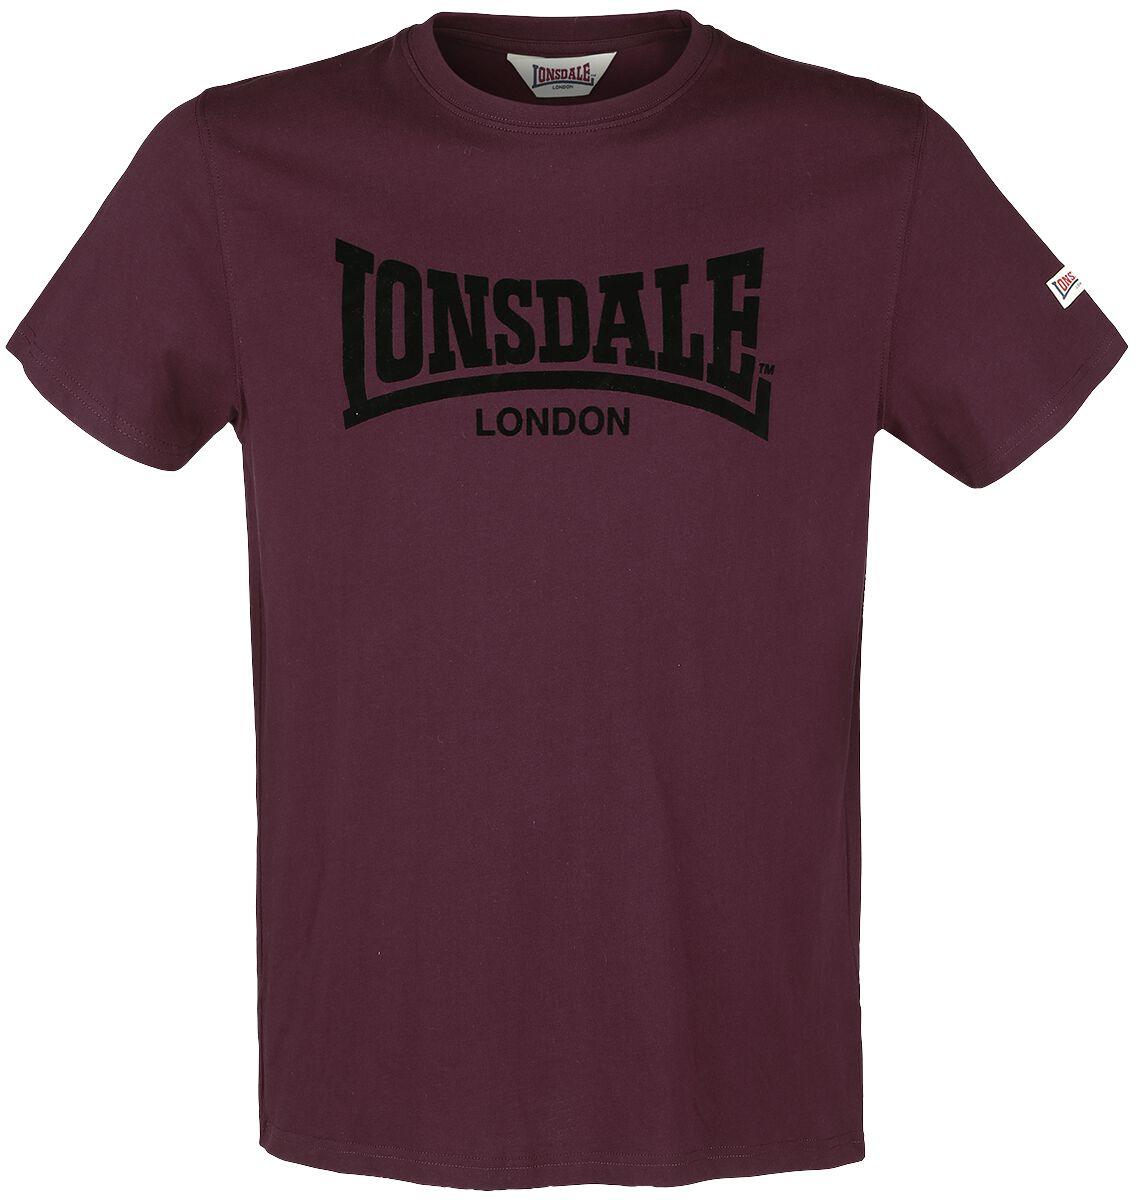 Lonsdale London LL008 One Tone T-Shirt burgundy